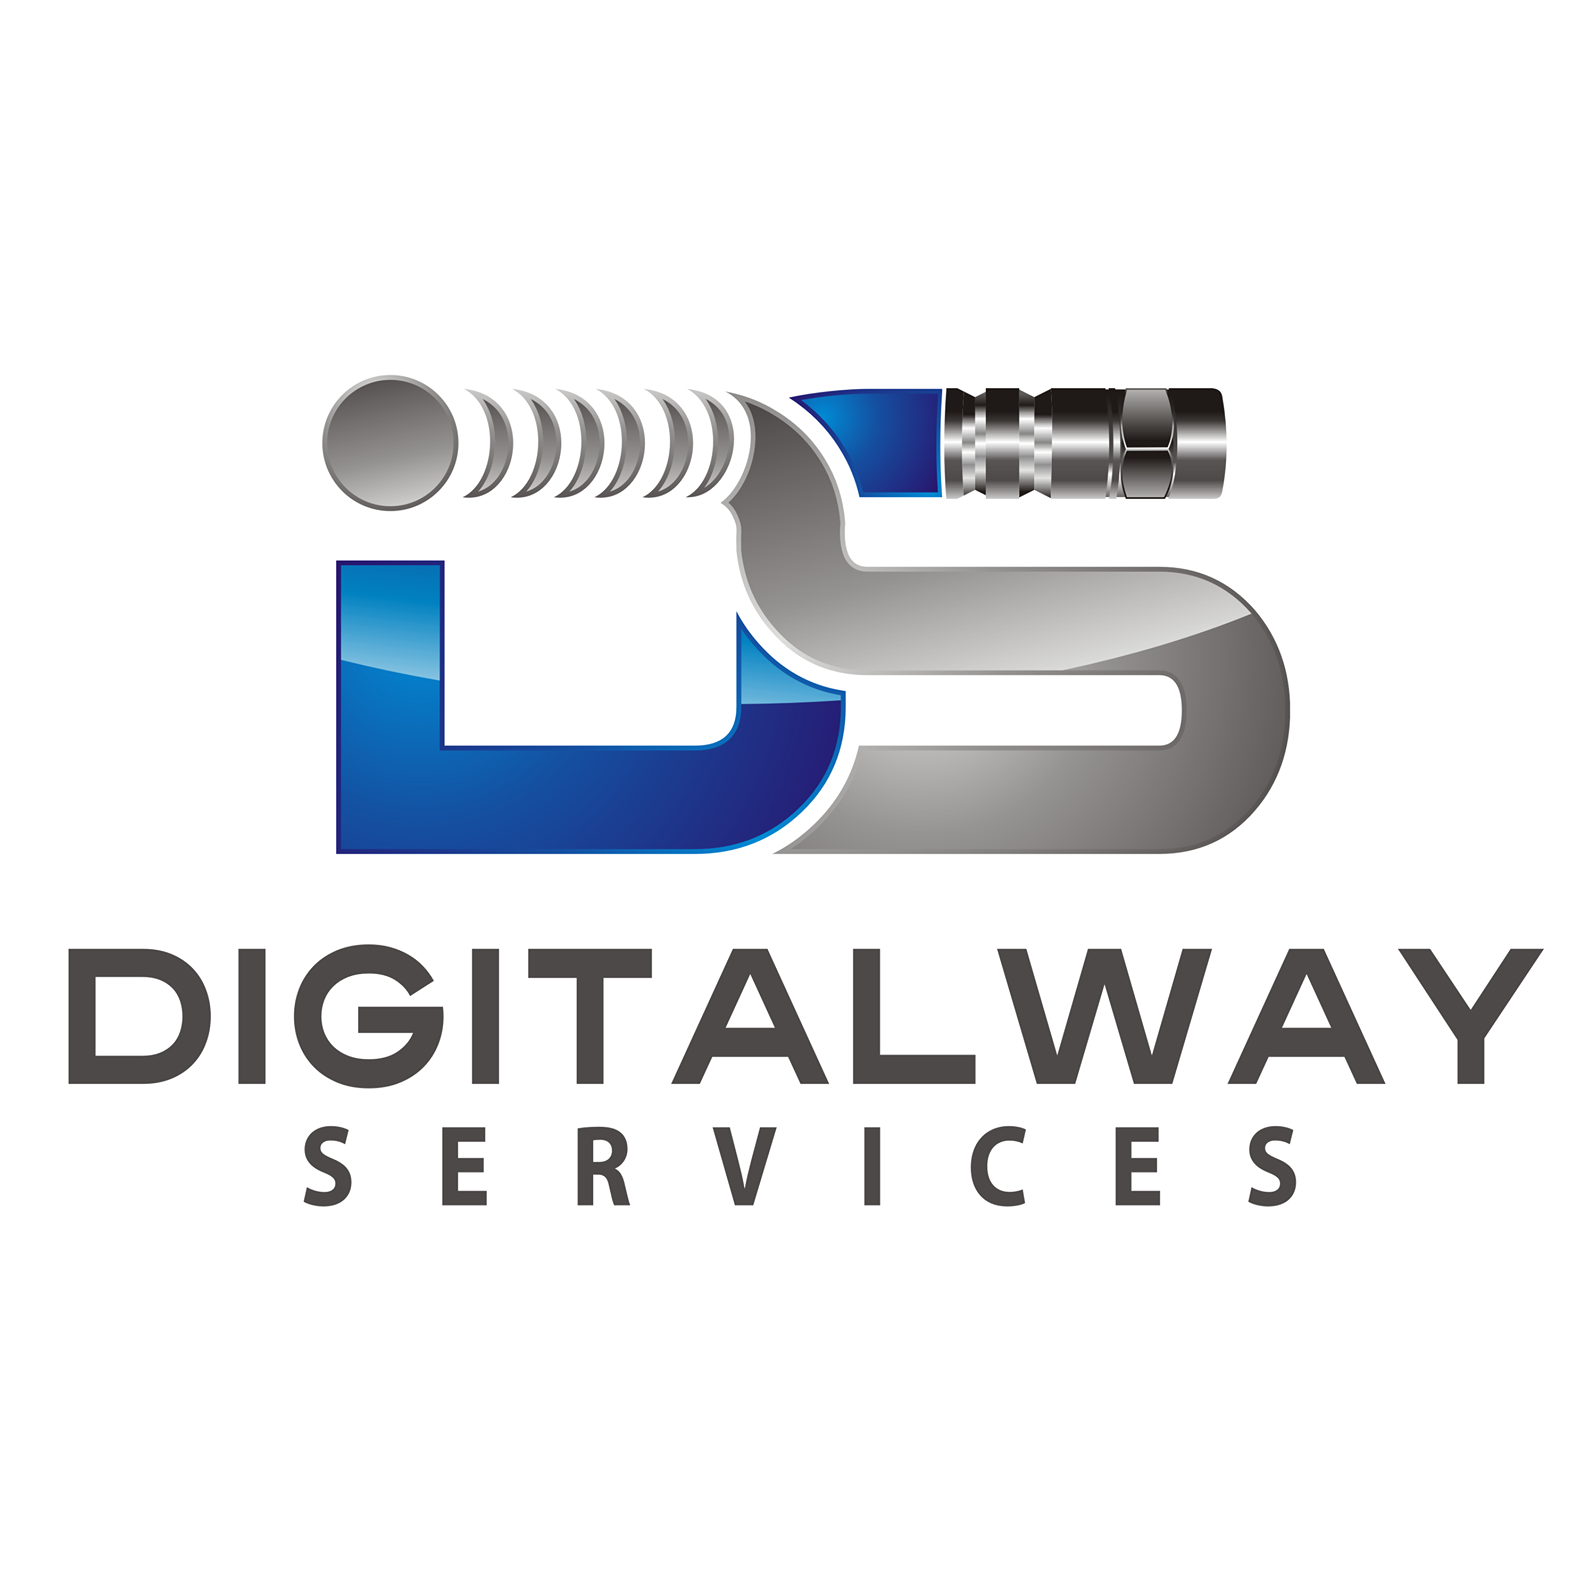 Digitalway Services